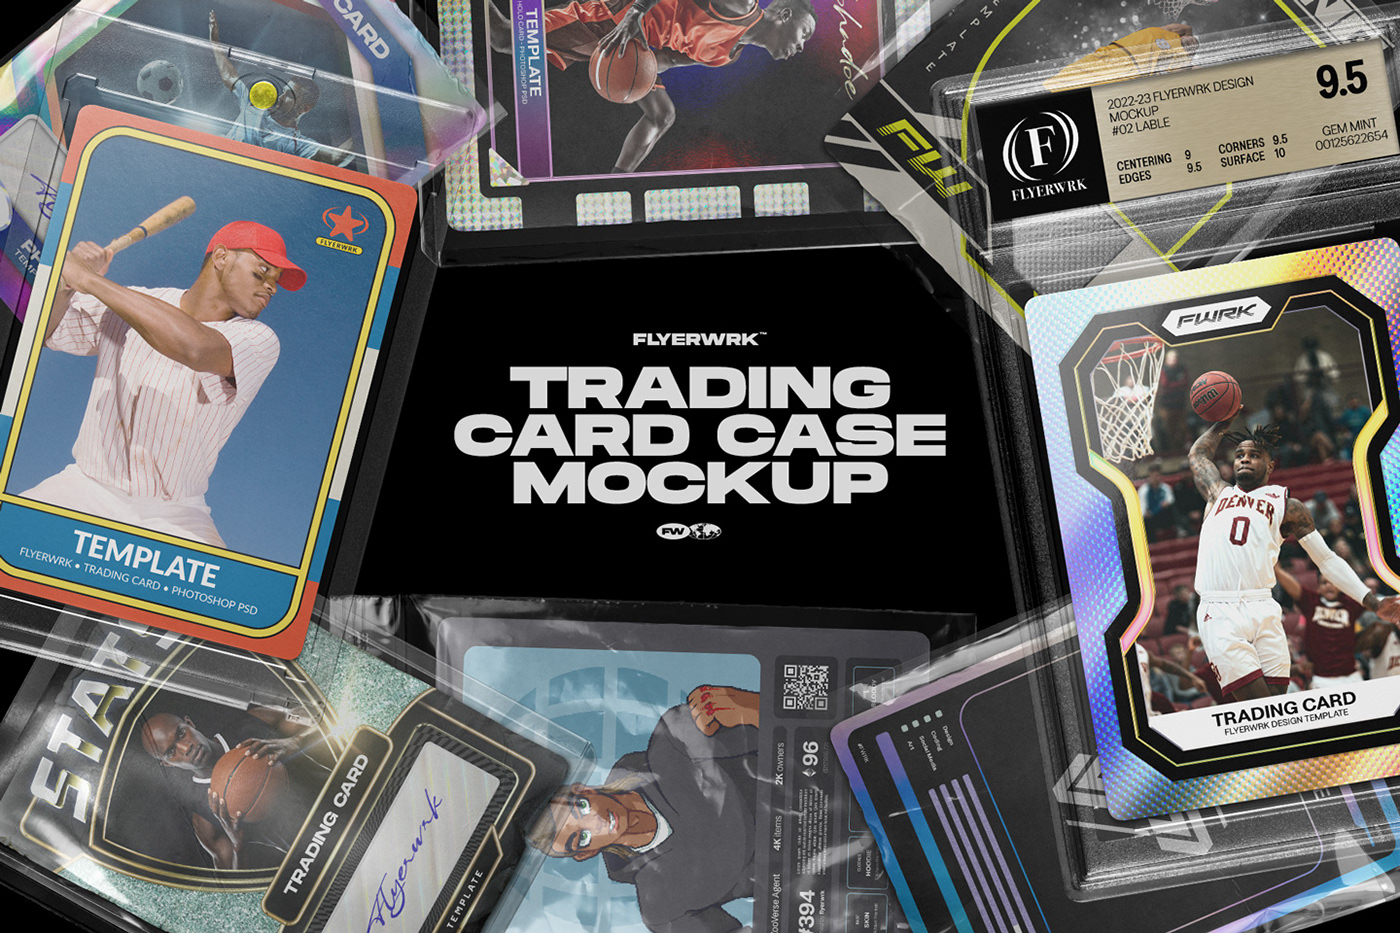 bag card case collectible grade Mockup nft sleeve toploader trading